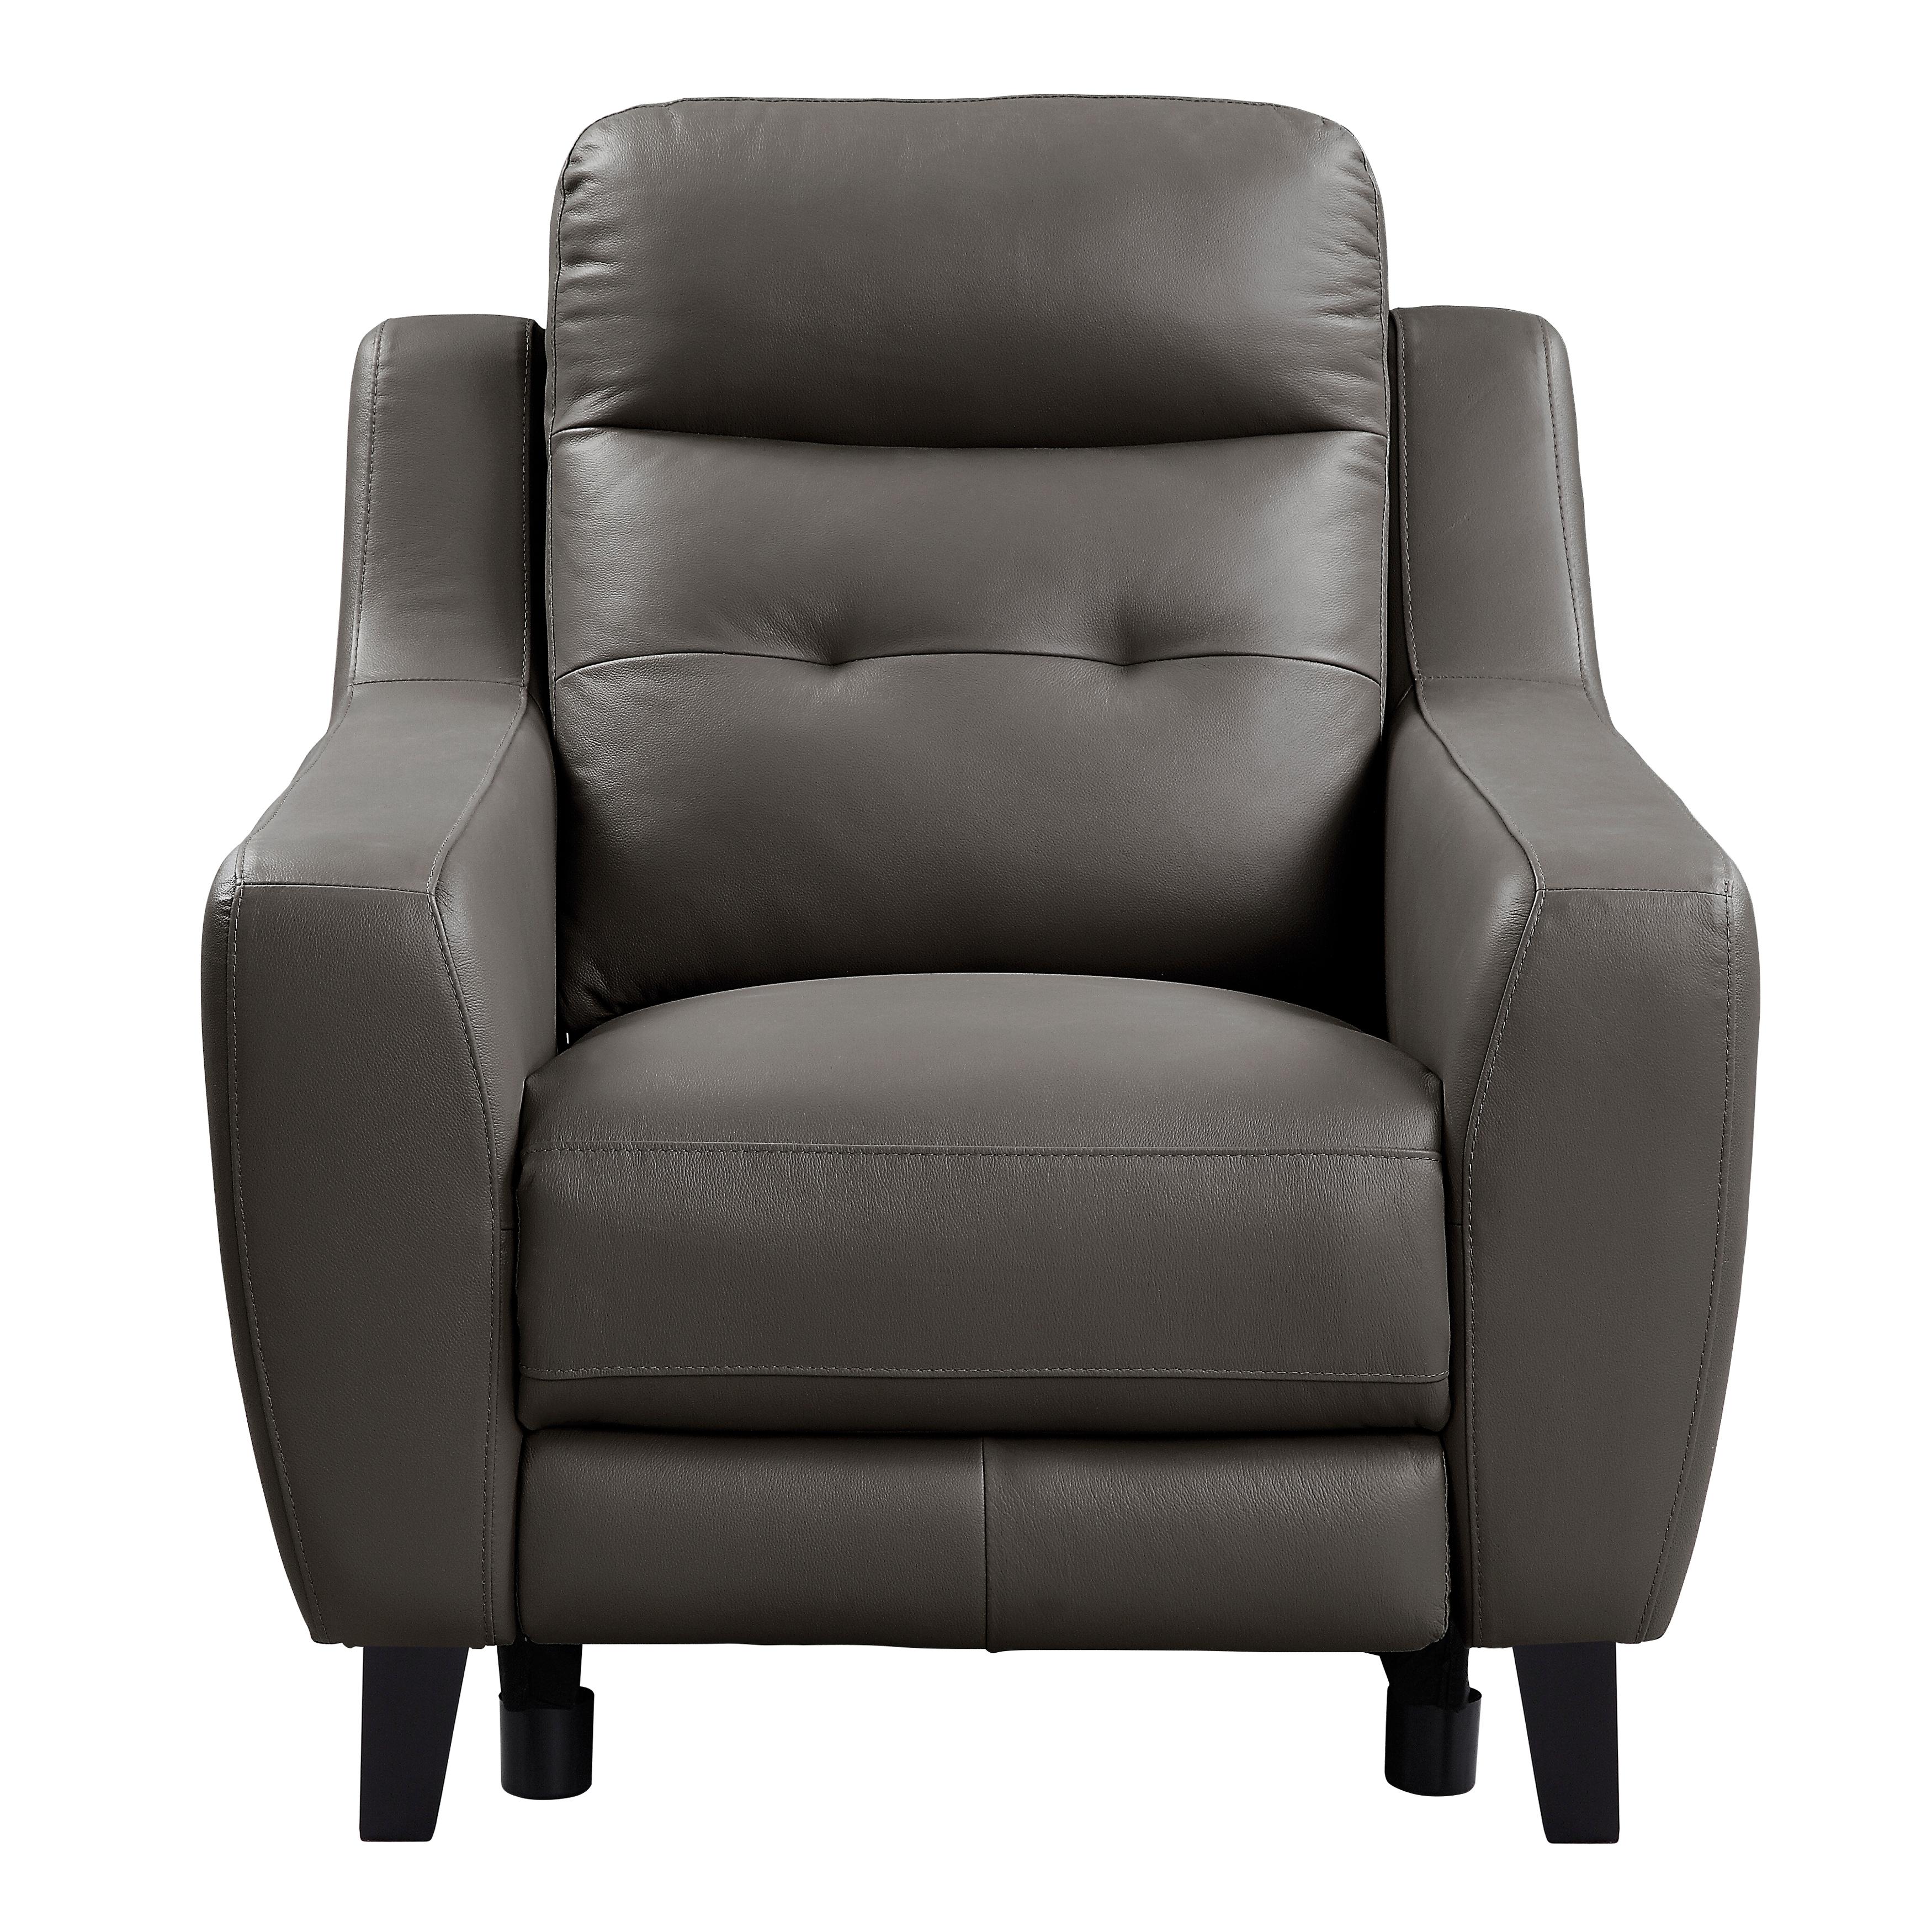 Modern Power Reclining Chair 9337GB-1PW Conrad 9337GB-1PW in Grayish Brown Leather